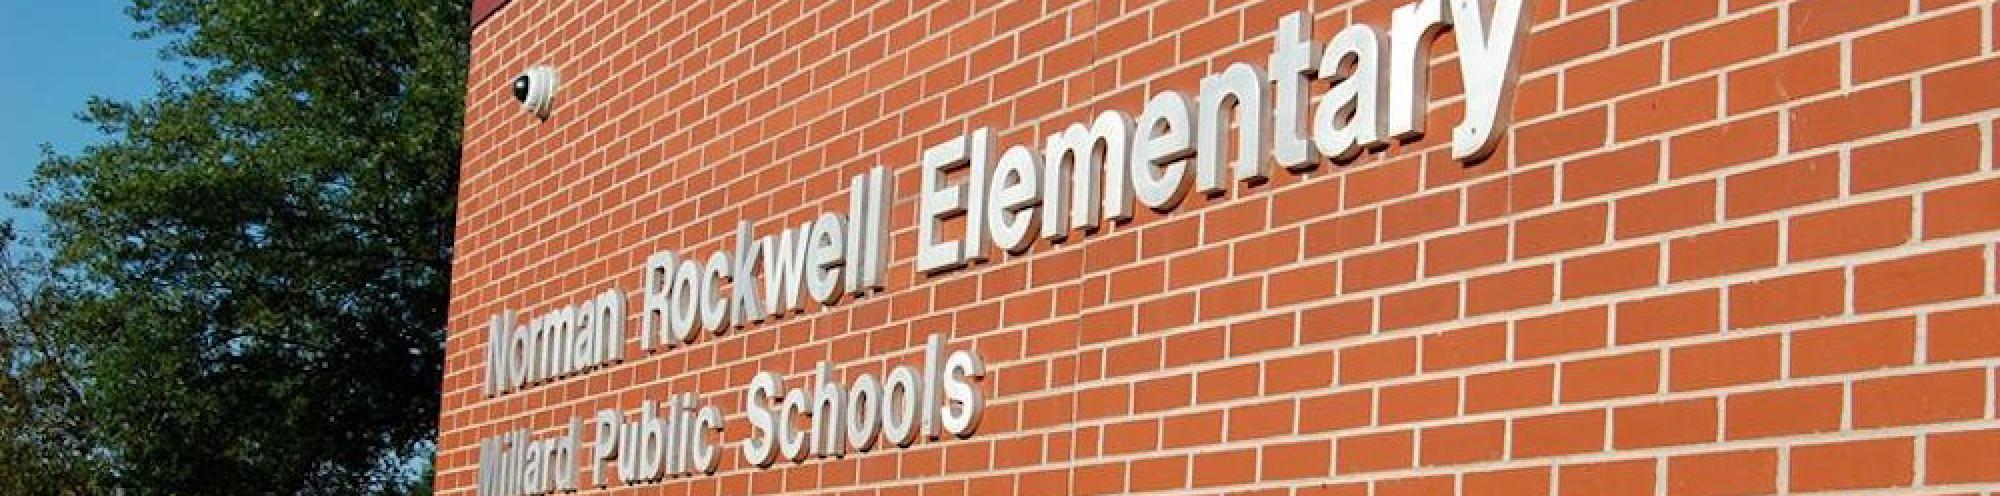 Rockwell Elementary